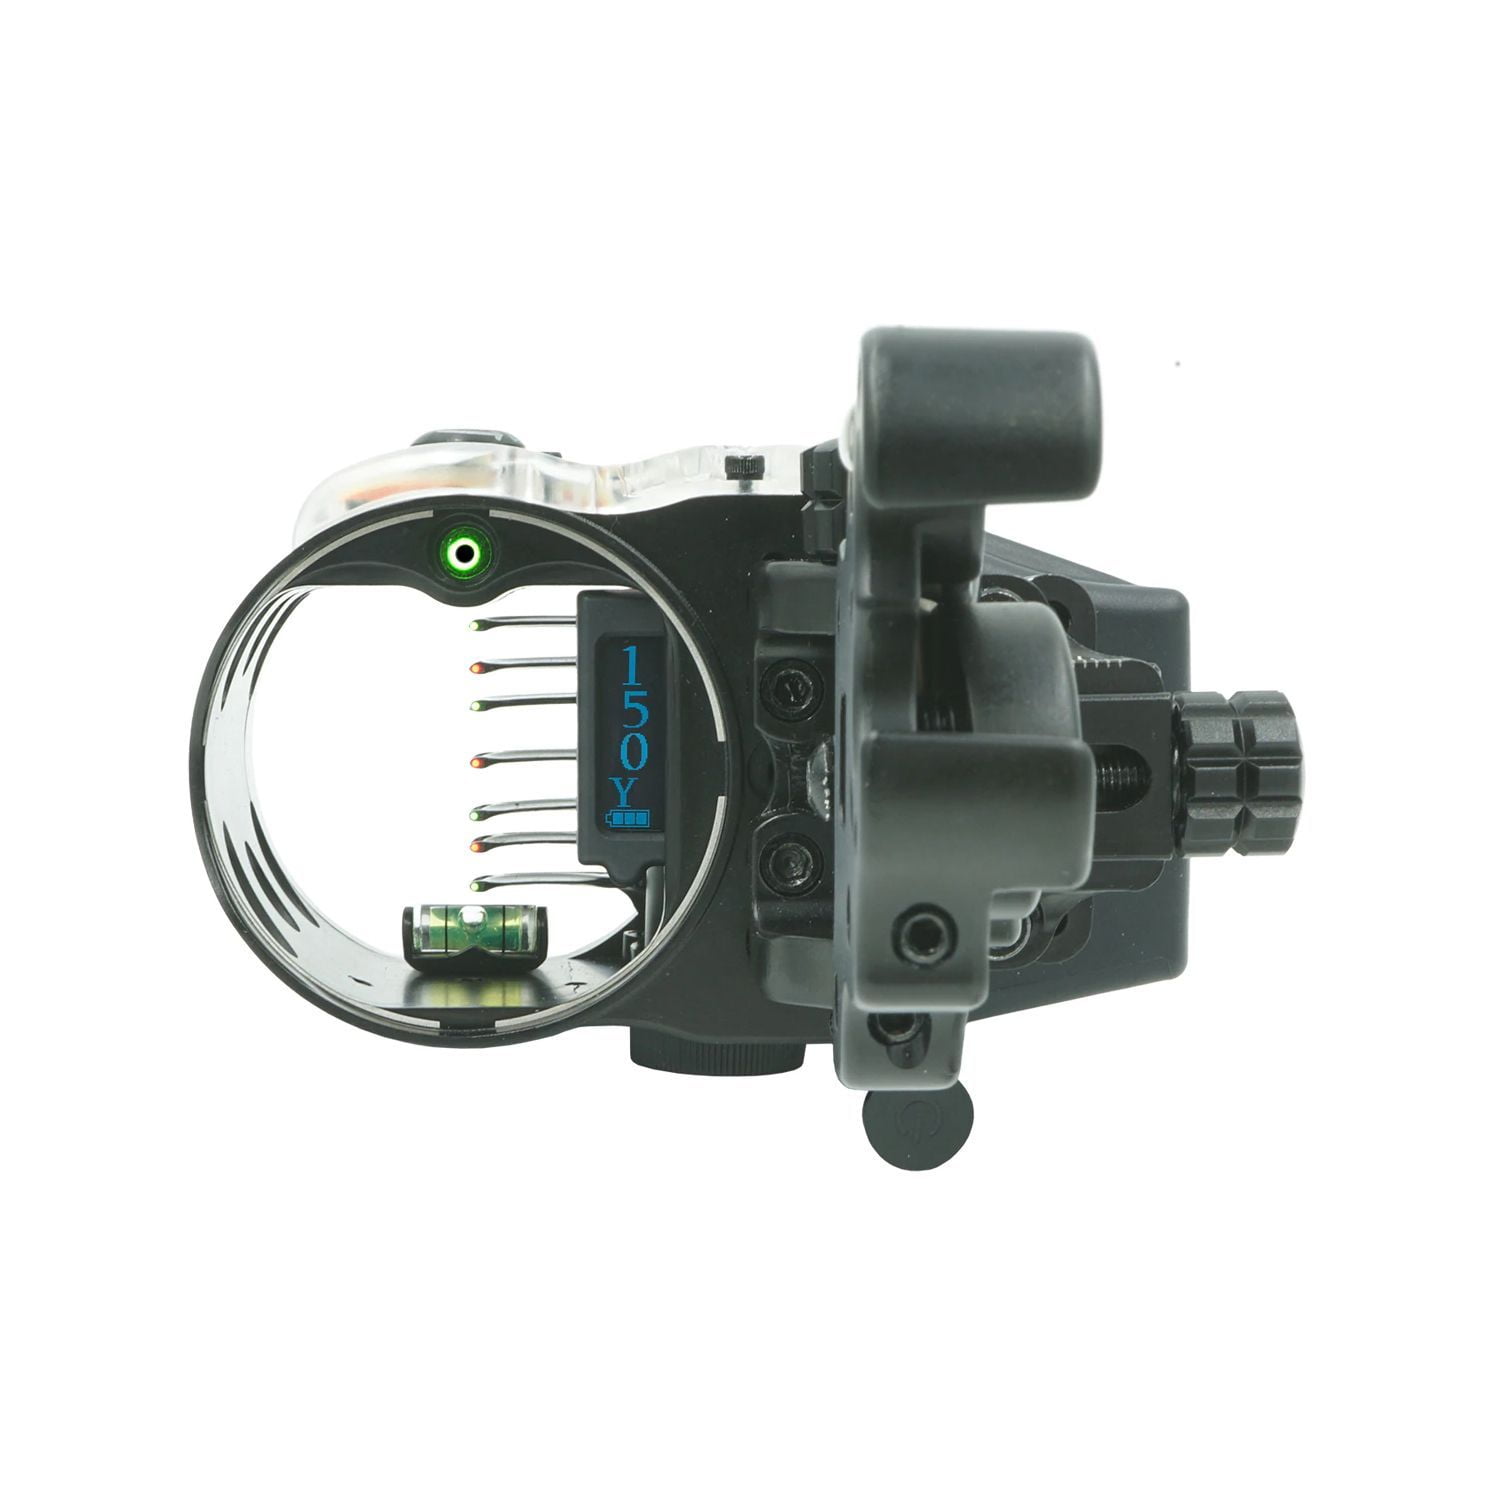 IQ bowsight Micro 5 broches Compound Bow Archery Sight Avec Retina Lock Technology Droitier